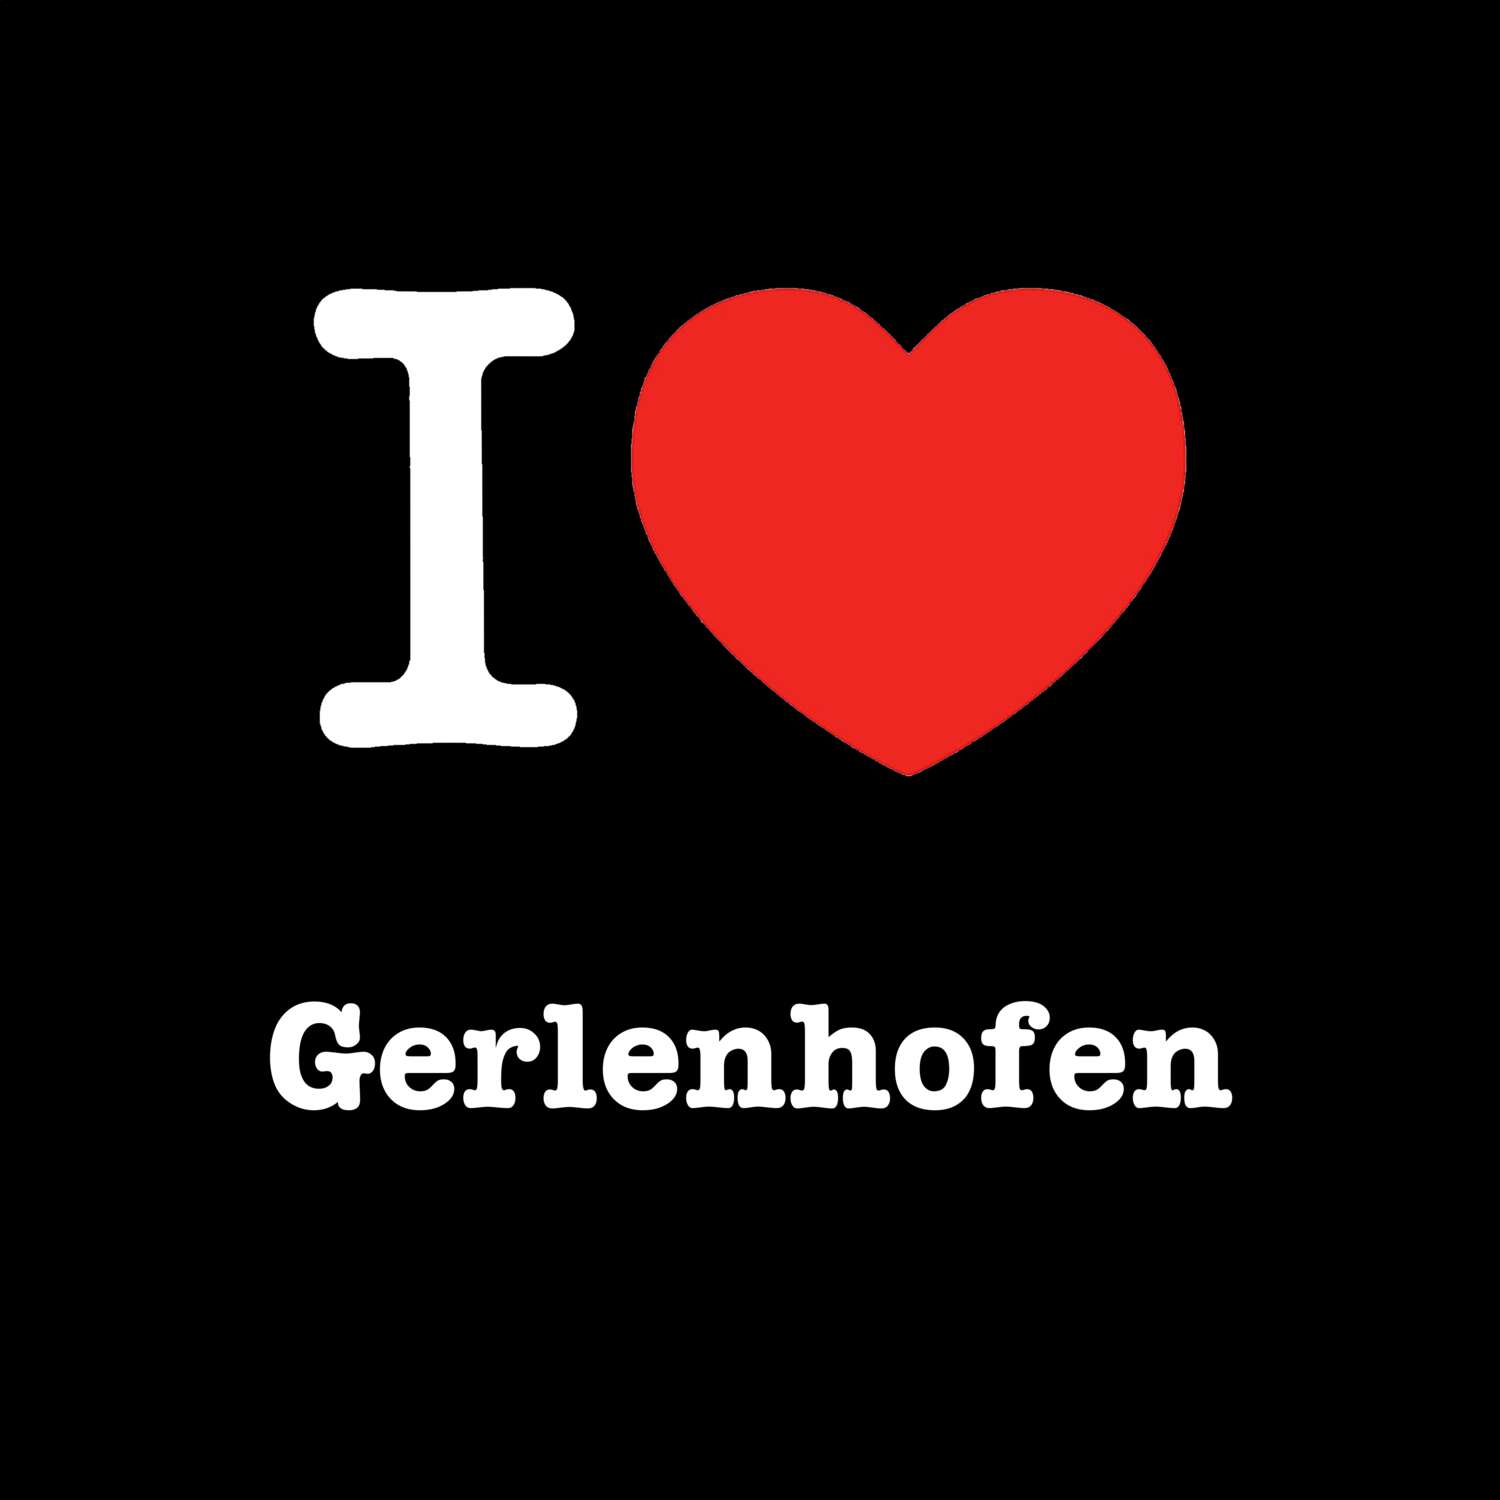 Gerlenhofen T-Shirt »I love«